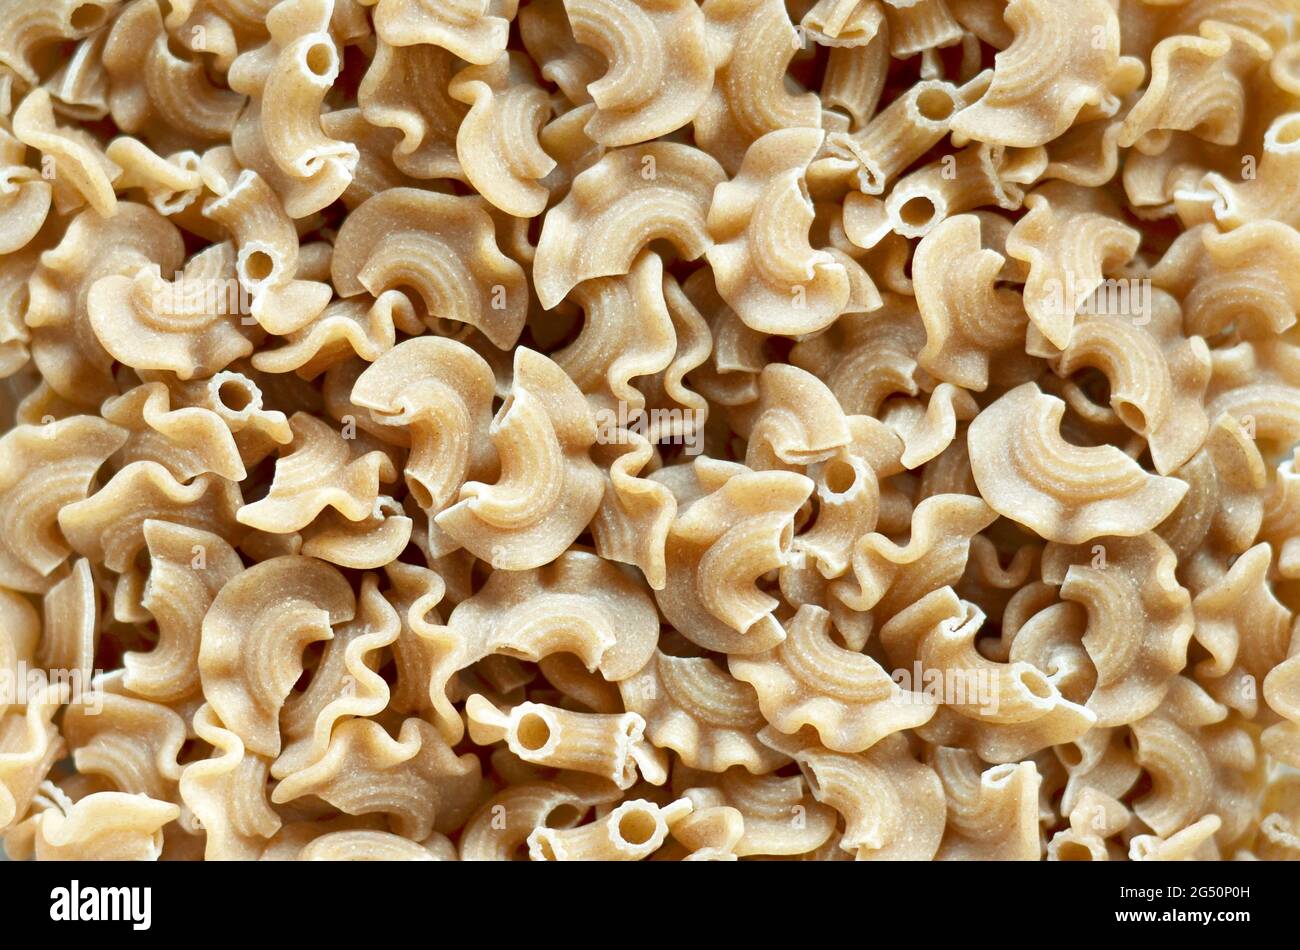 Dry whole wheat macaroni pasta on a full frame, top view. Stock Photo